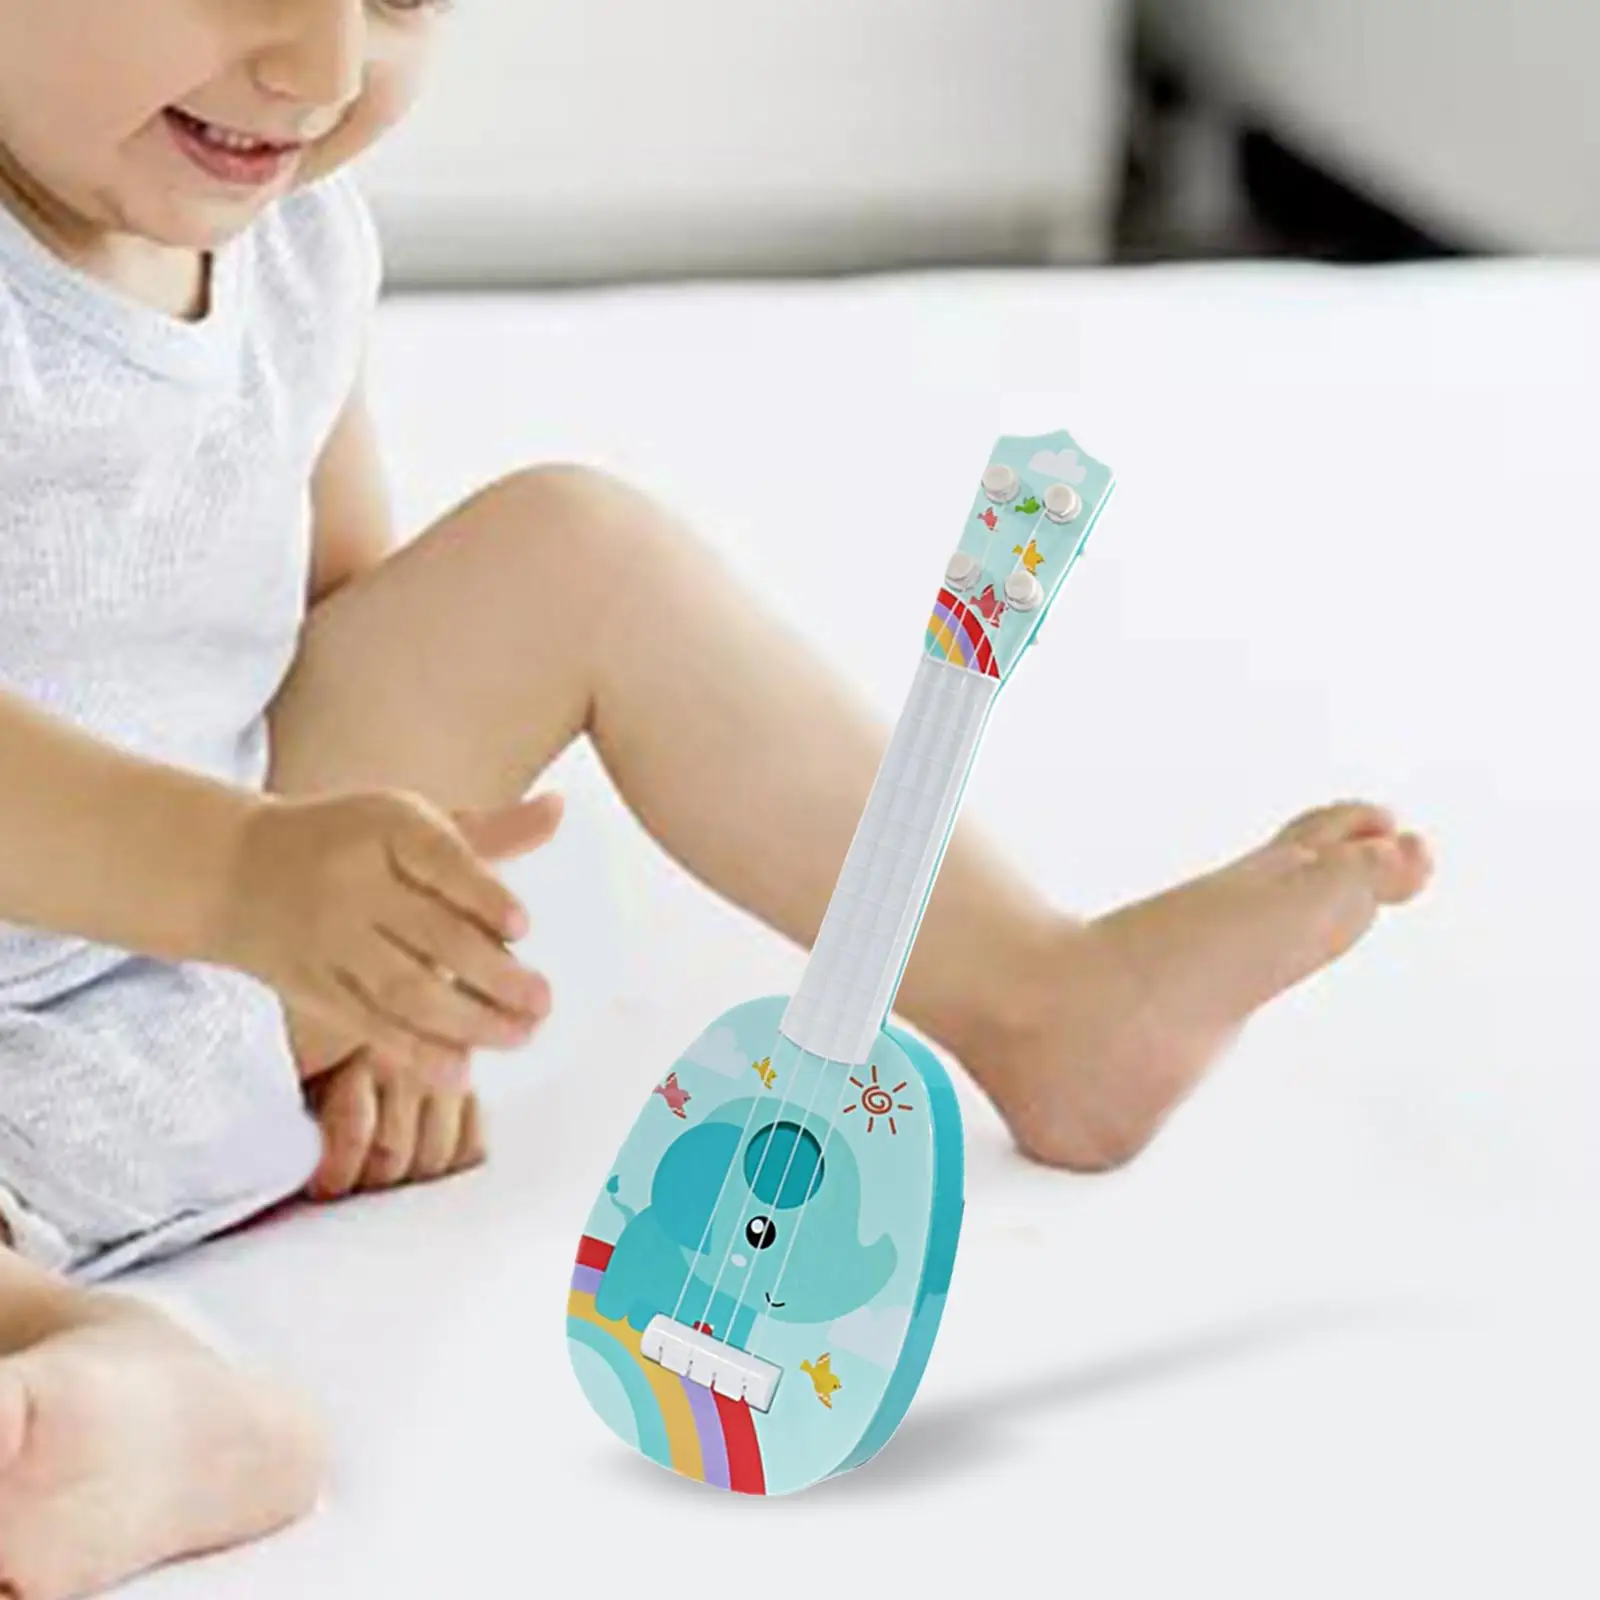 Realistic Ukulele Guitar Toys Early Learning Education Mini Ukulele Musical Instruments for Toddlers Kids Children Beginner